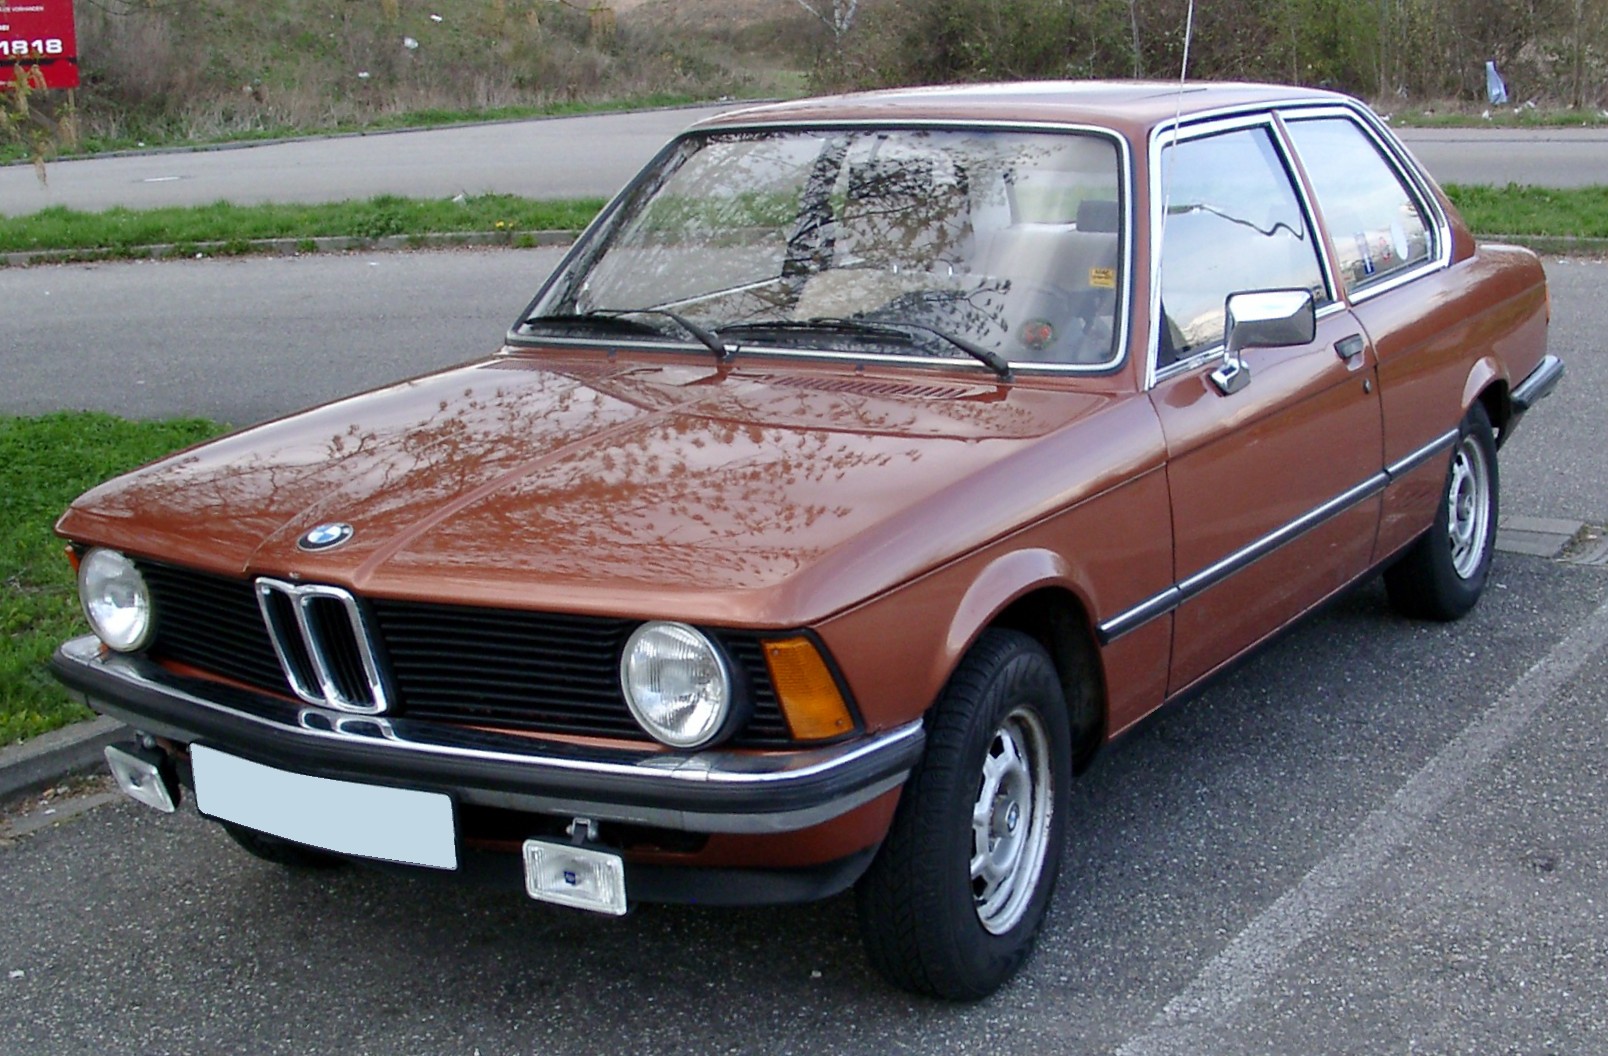 File:2015 BMW X3 sDrive F25 (rear).jpg - Wikimedia Commons